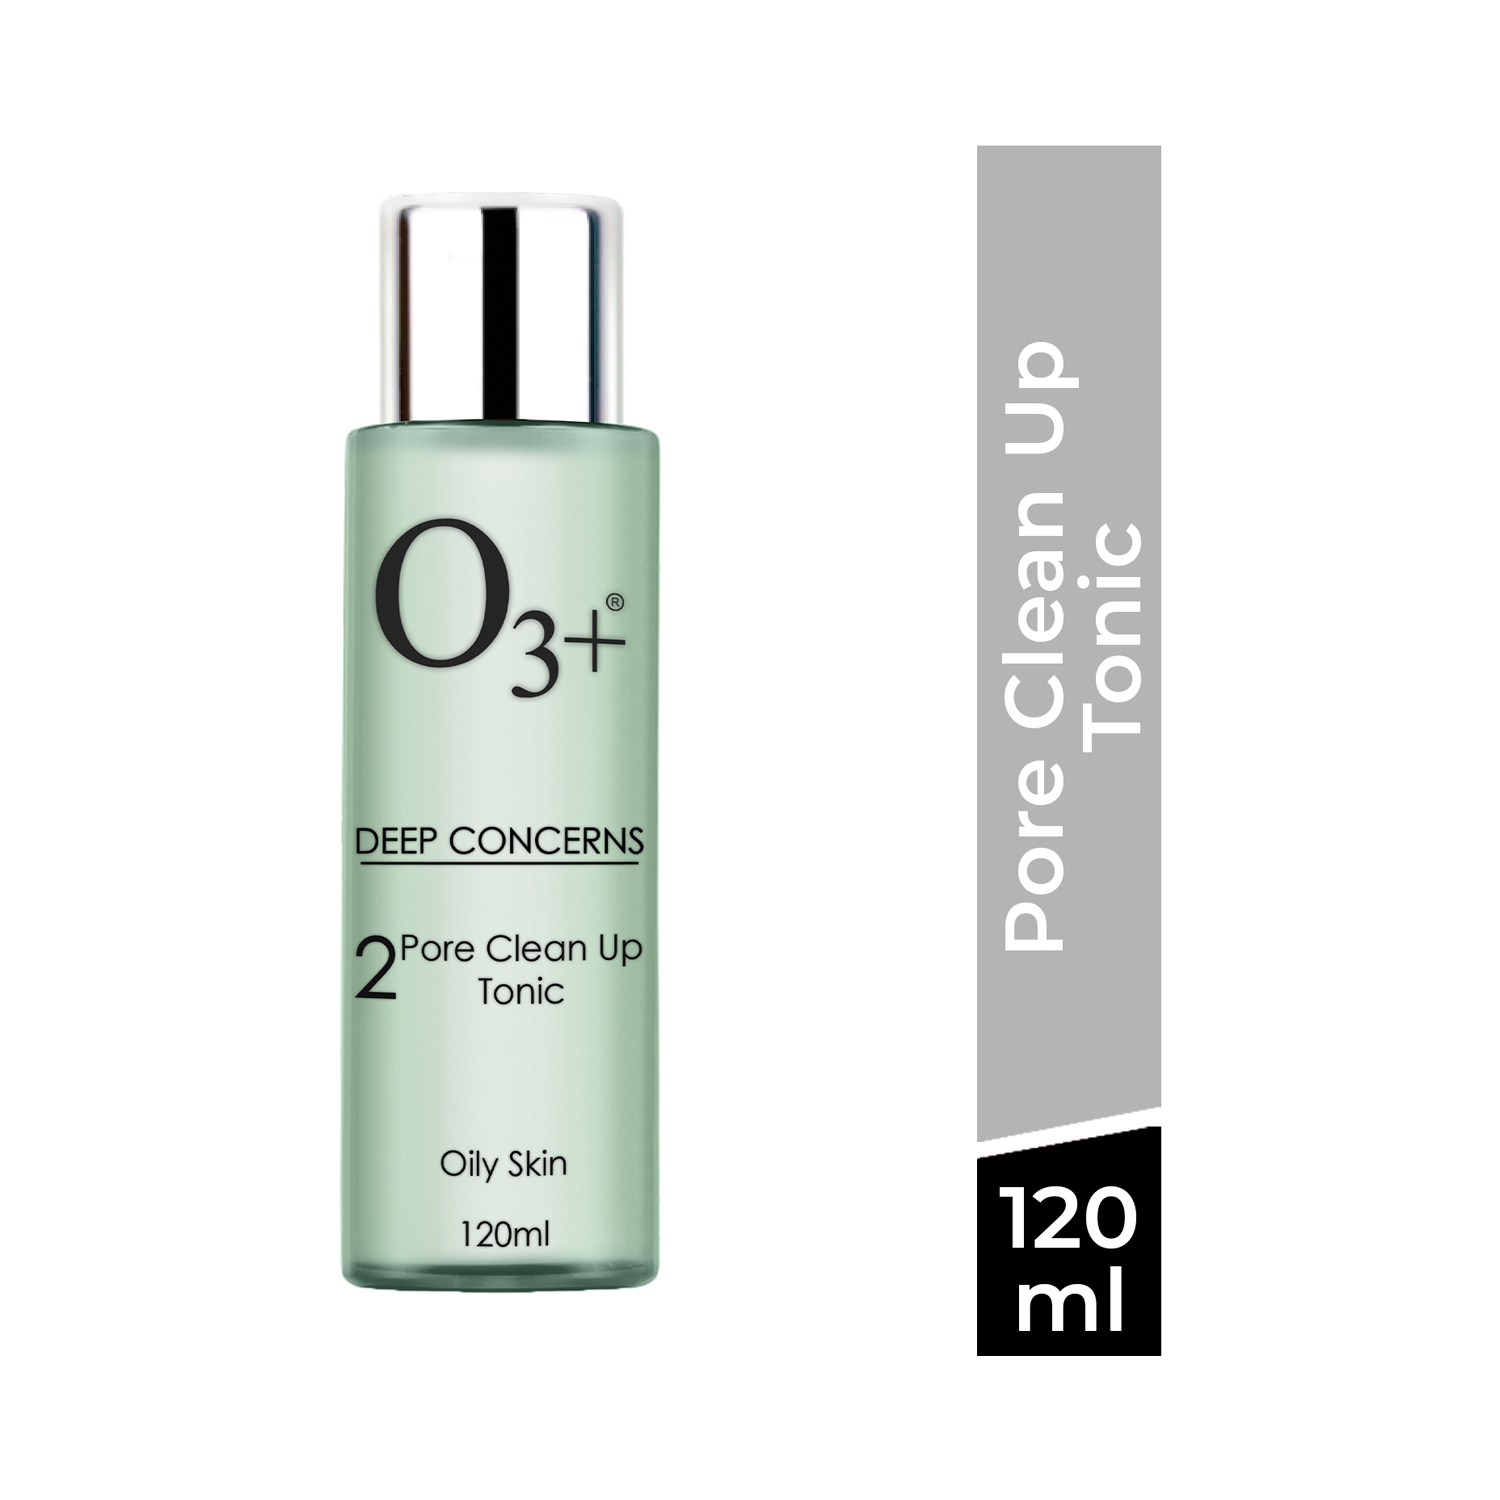 O3+ | O3+ Deep Concern 2 Pore Clean Up Tonic (120ml)